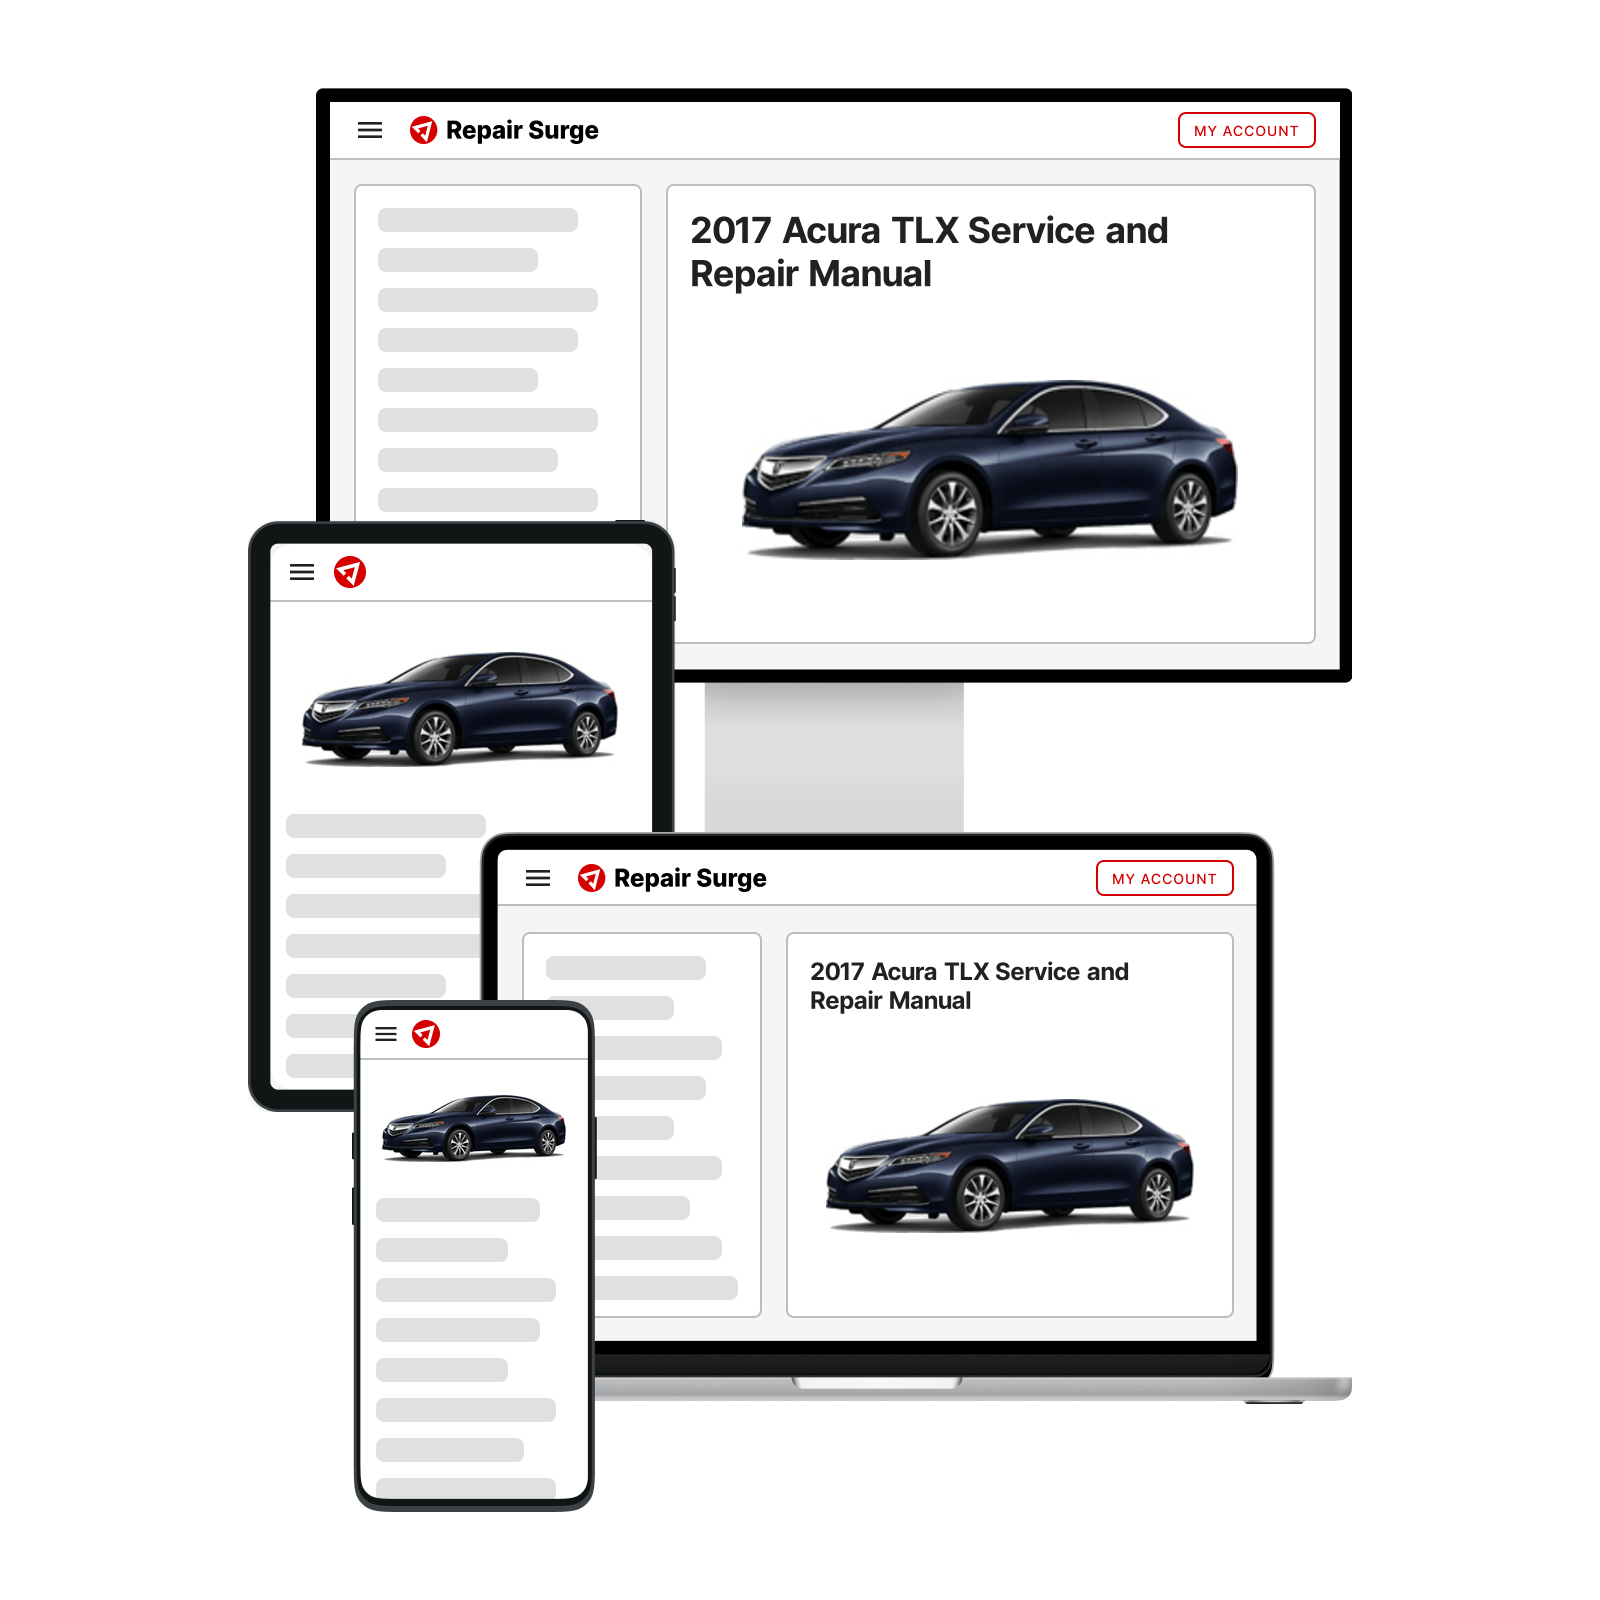 2017 Acura TLX service and repair manual hero image